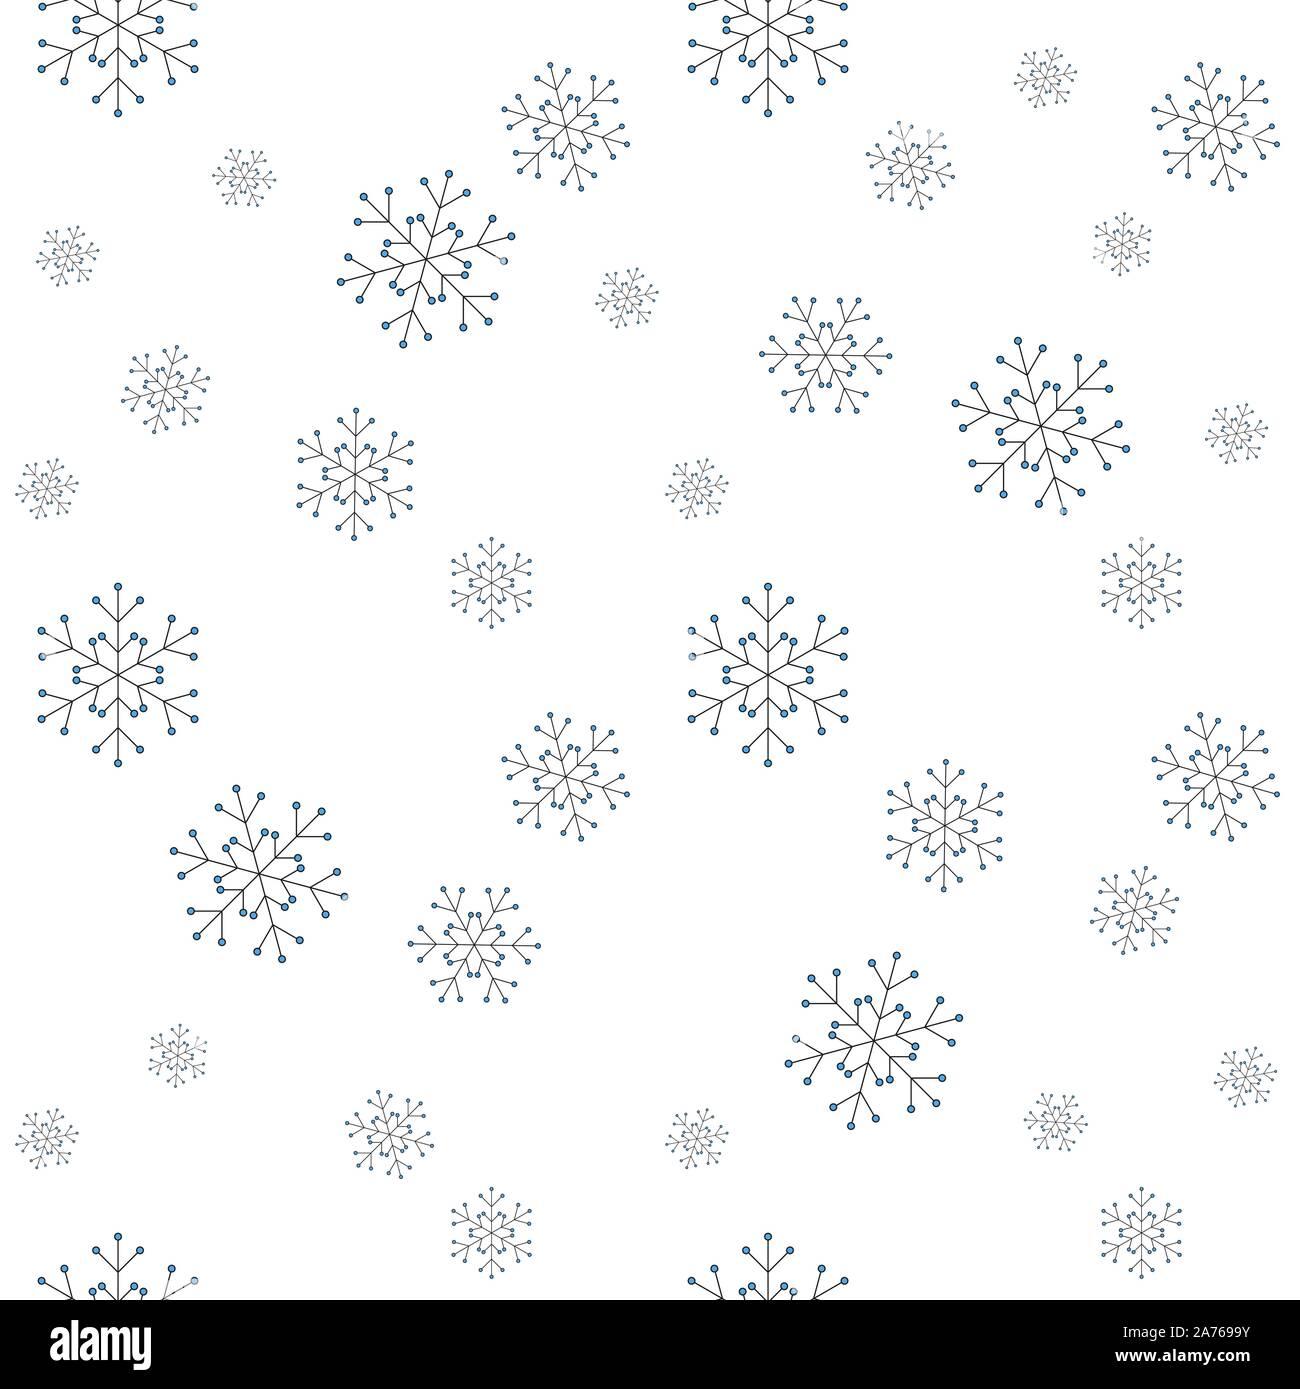 Snowflake simple seamless pattern Black snow on white background